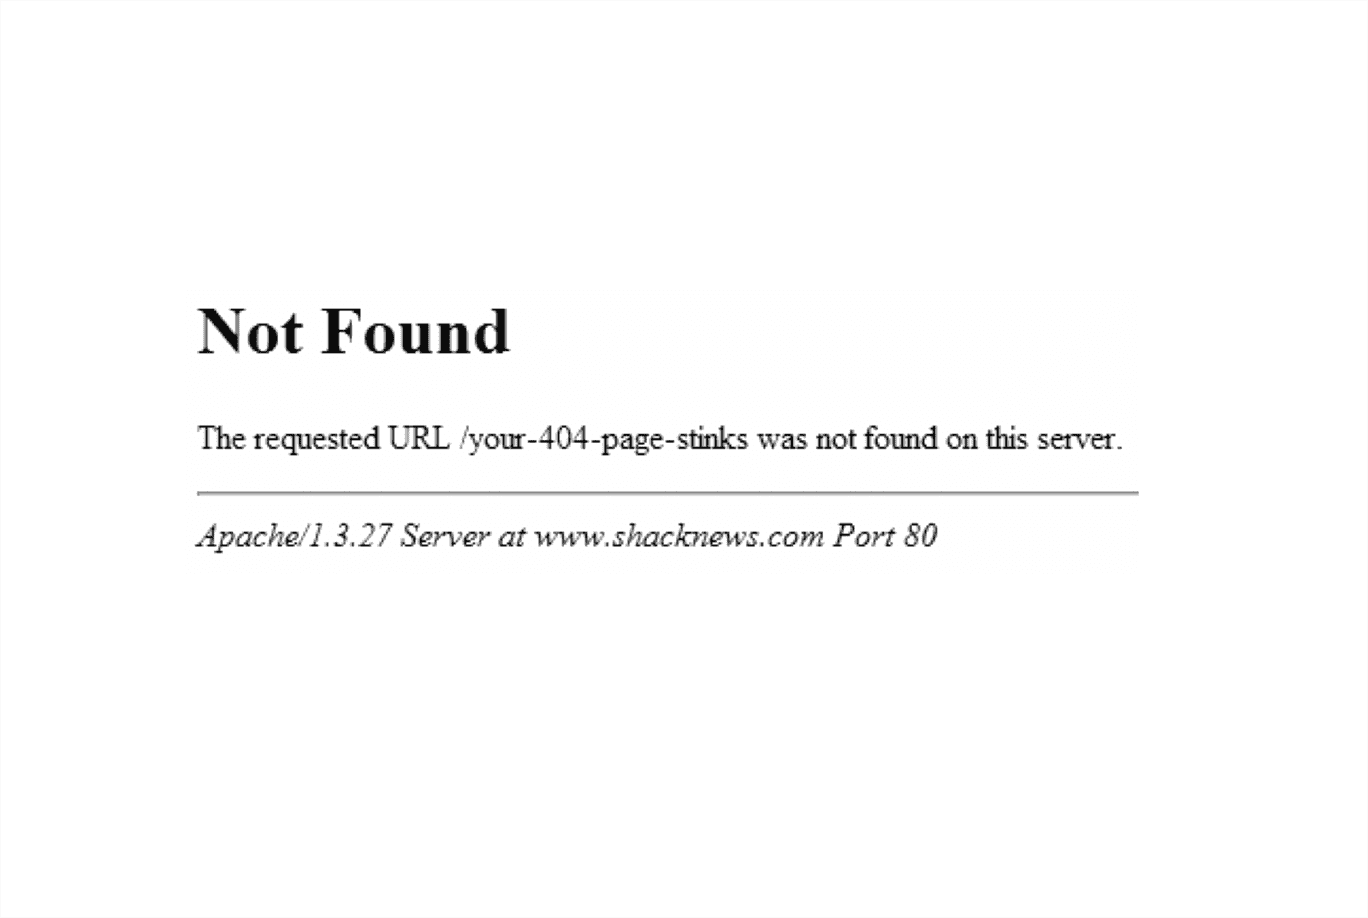 Basic 404 page